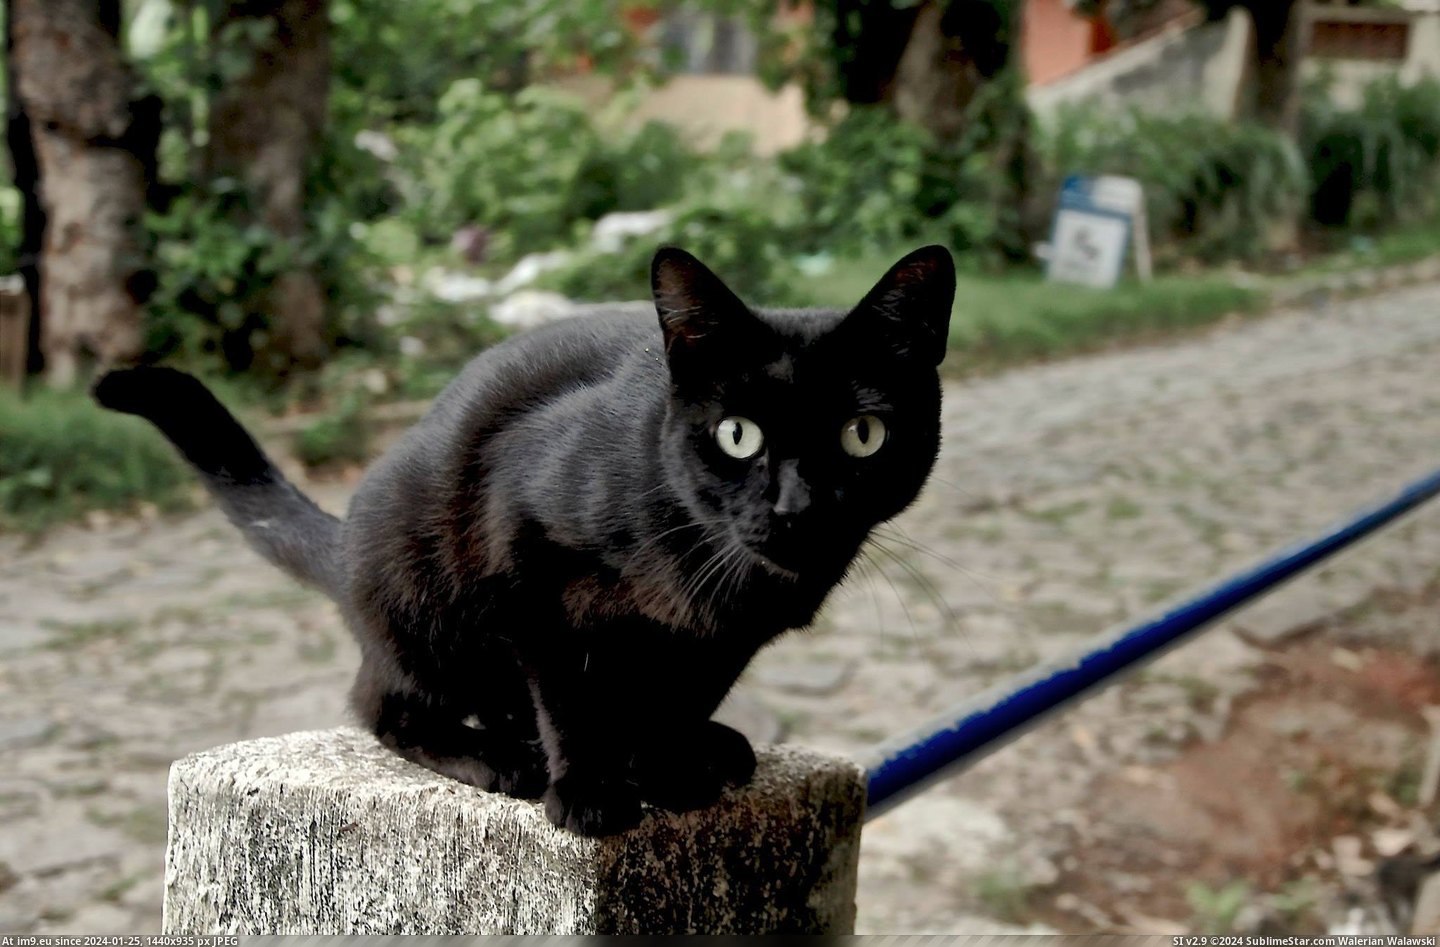 #Cats #Cat #Curious #Street #Brazilian [Cats] Just a Curious Brazilian Street Cat Pic. (Bild von album My r/CATS favs))